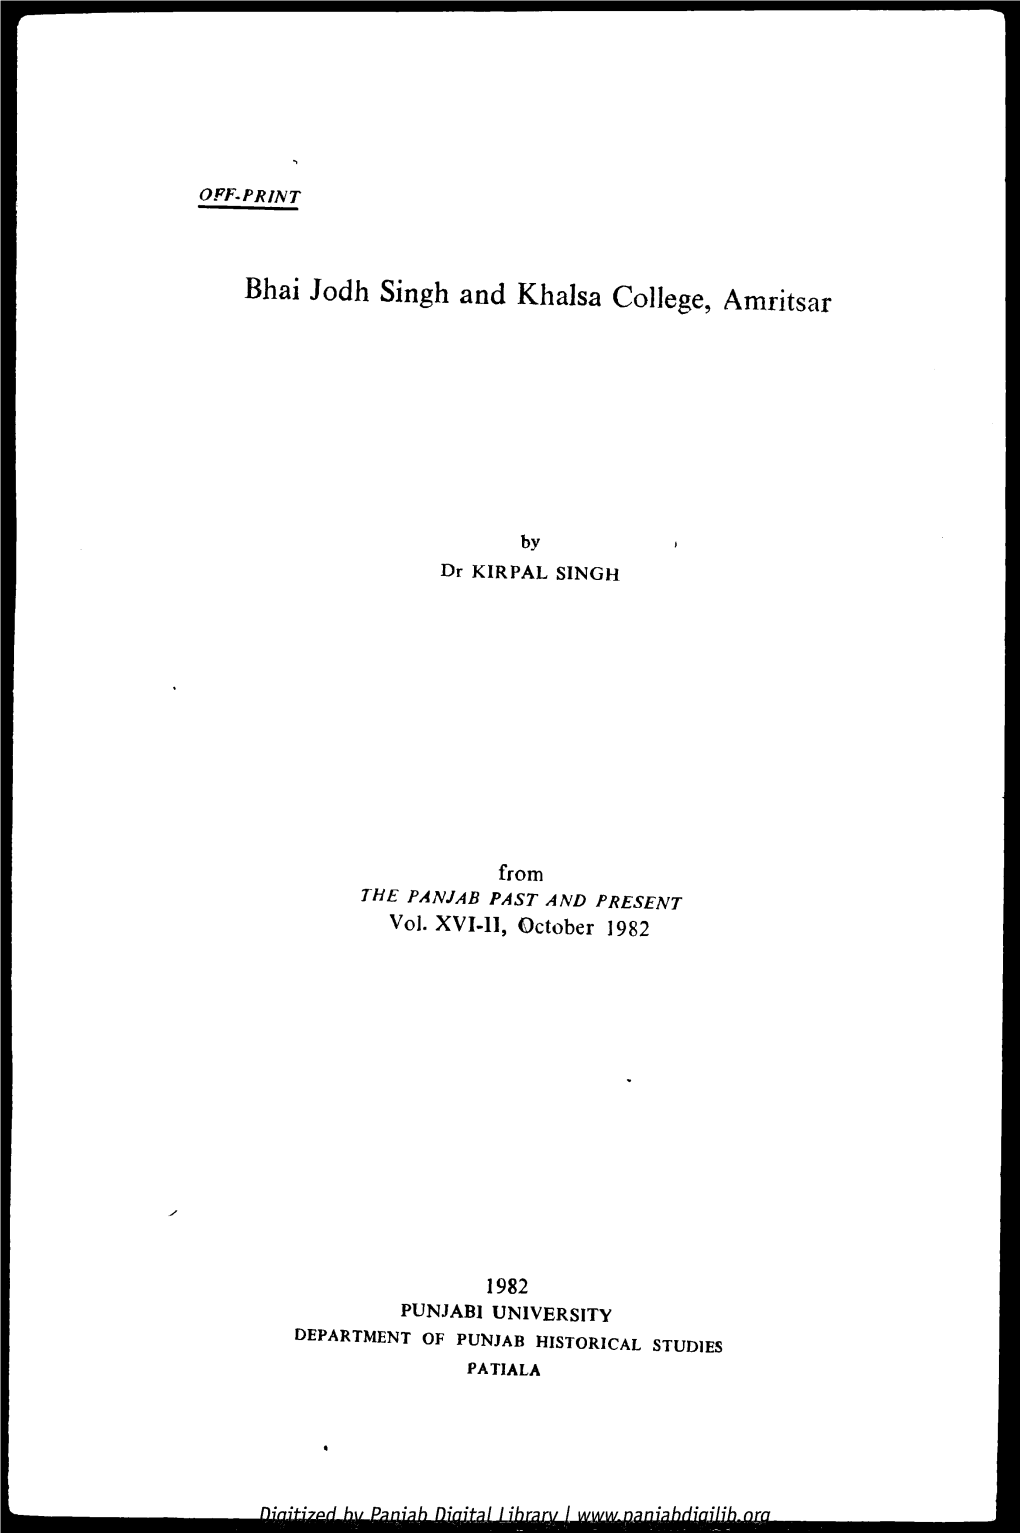 Bhai Jodh Singh and Khalsa College, Amritsar